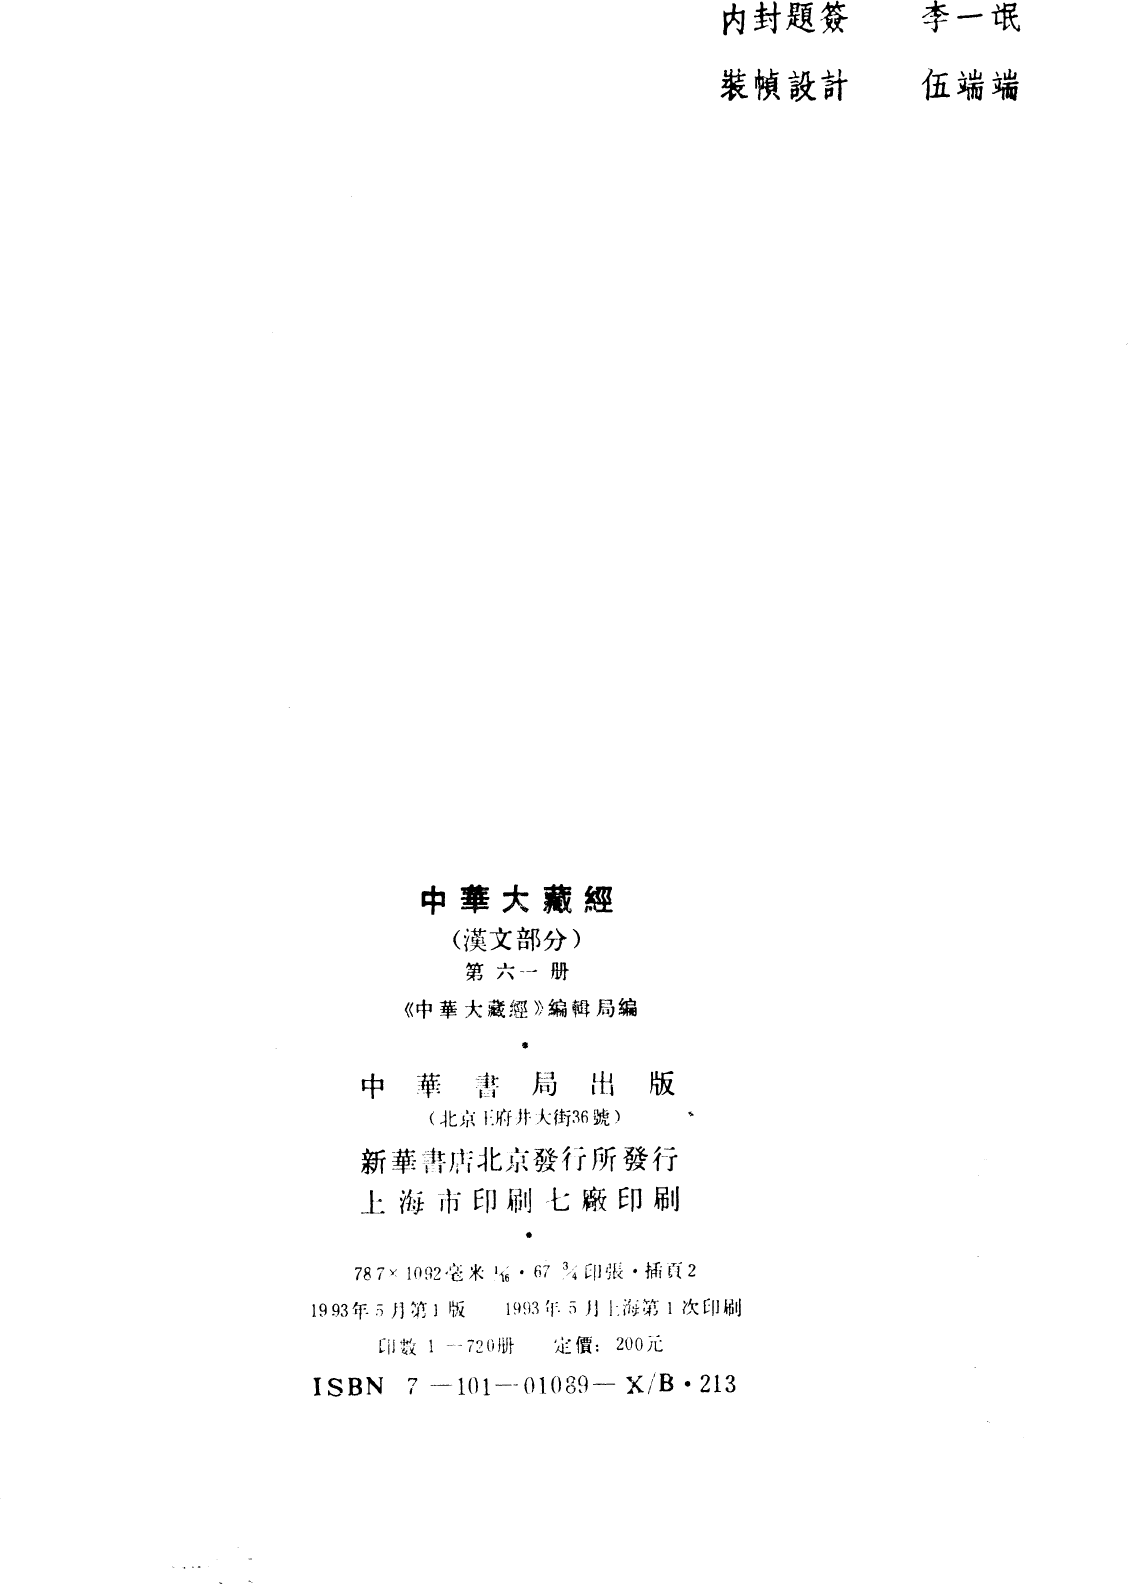 File:《中華大藏經》 第61冊 版權頁.png